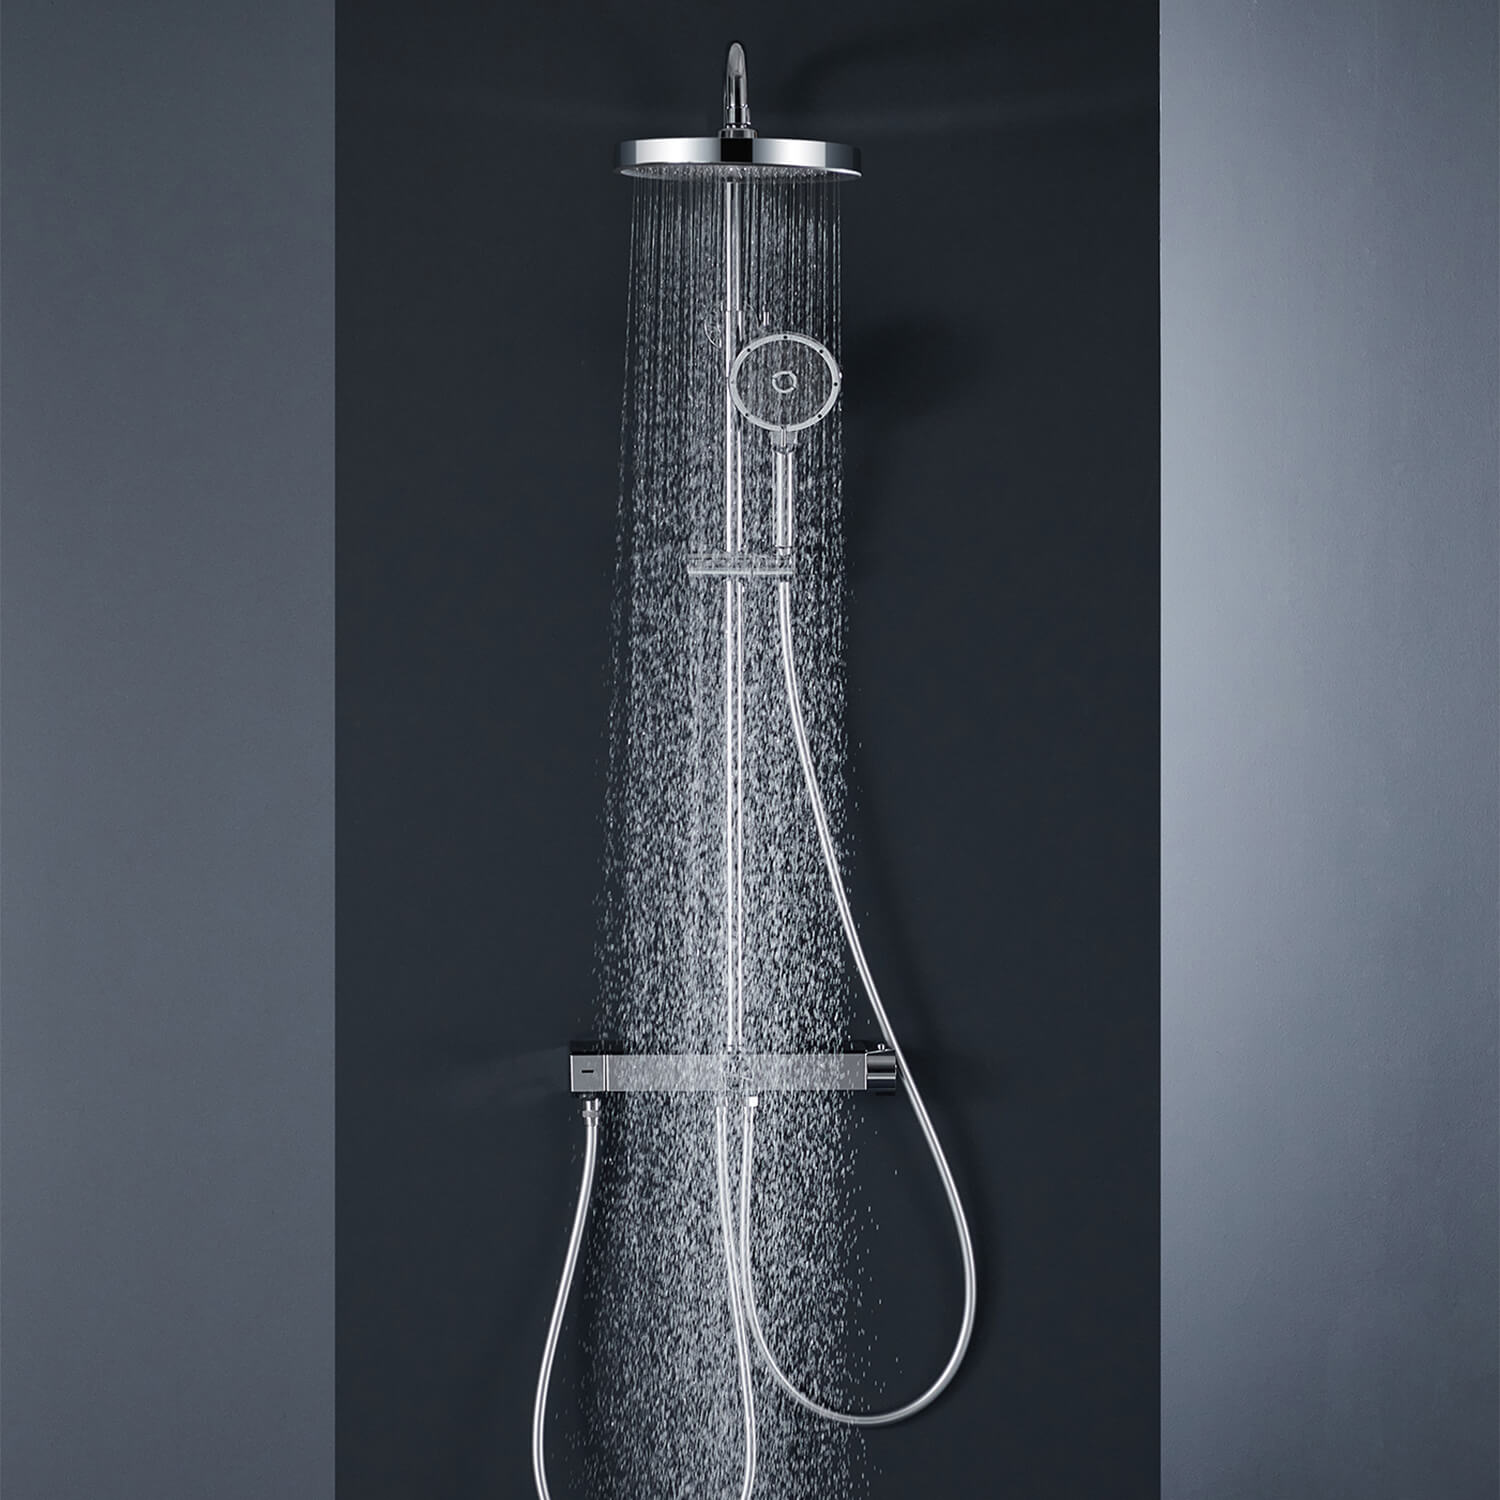 Multifunction Shower Column Set with Bidet Sprayer Bathroom Shower Faucet Set 10 inch Shower Head - WELQUEEN HOME DECOR